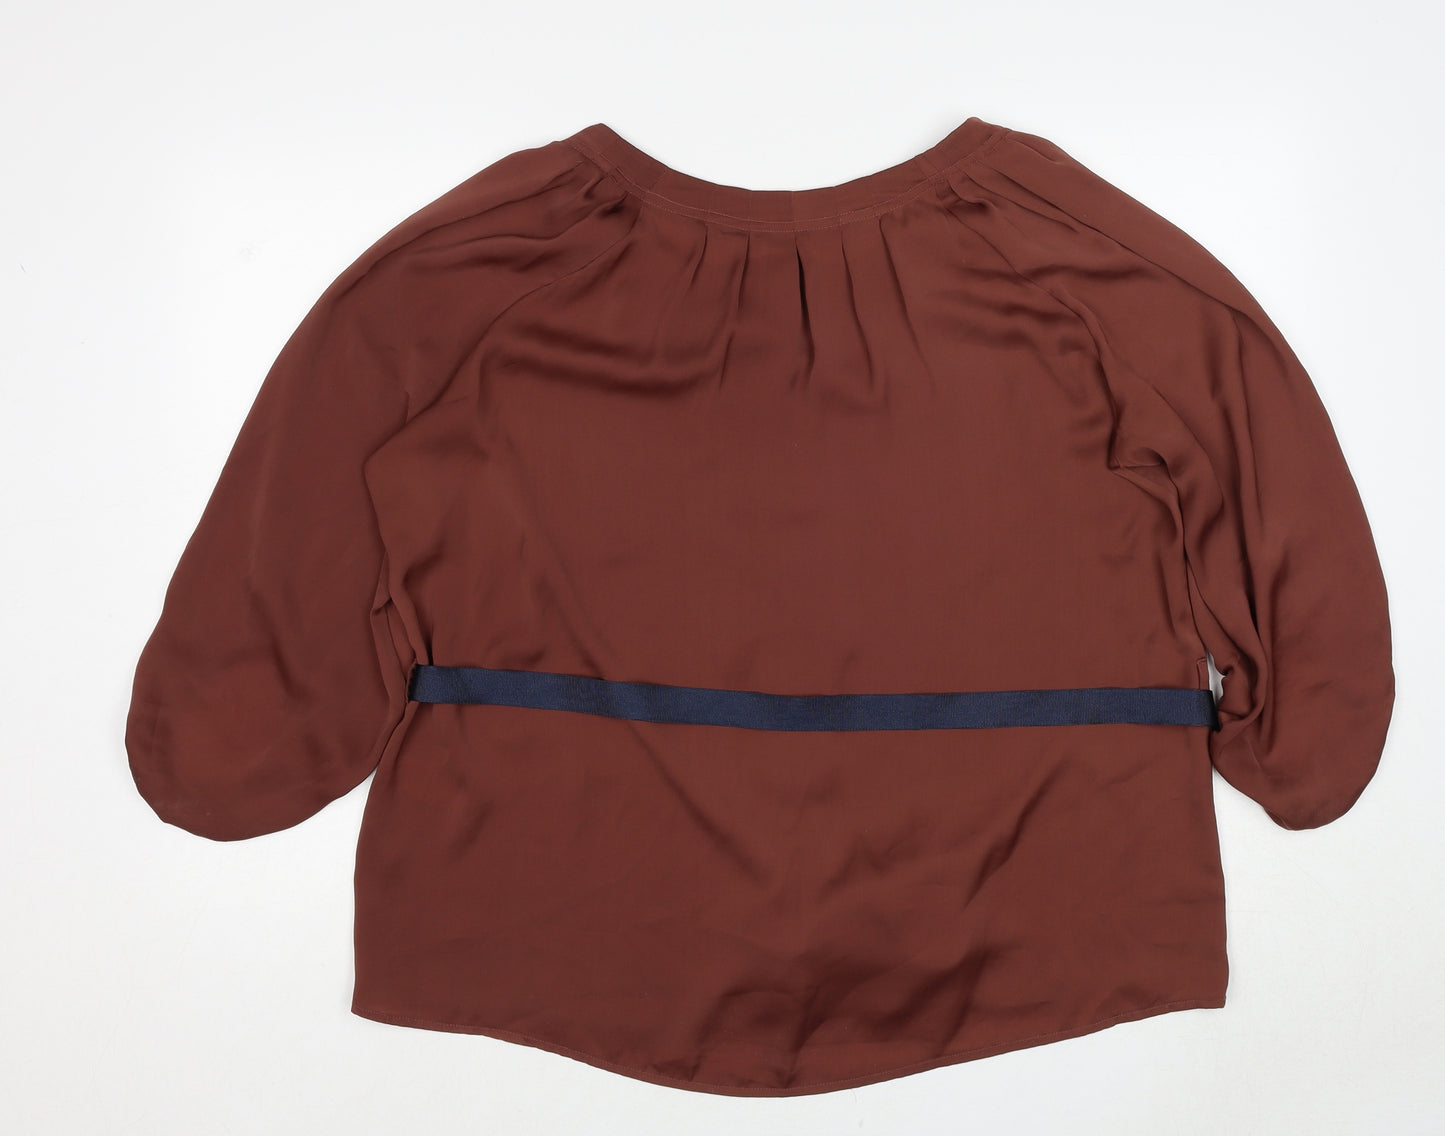 Debenhams Womens Brown Polyester Basic Blouse Size 16 Round Neck